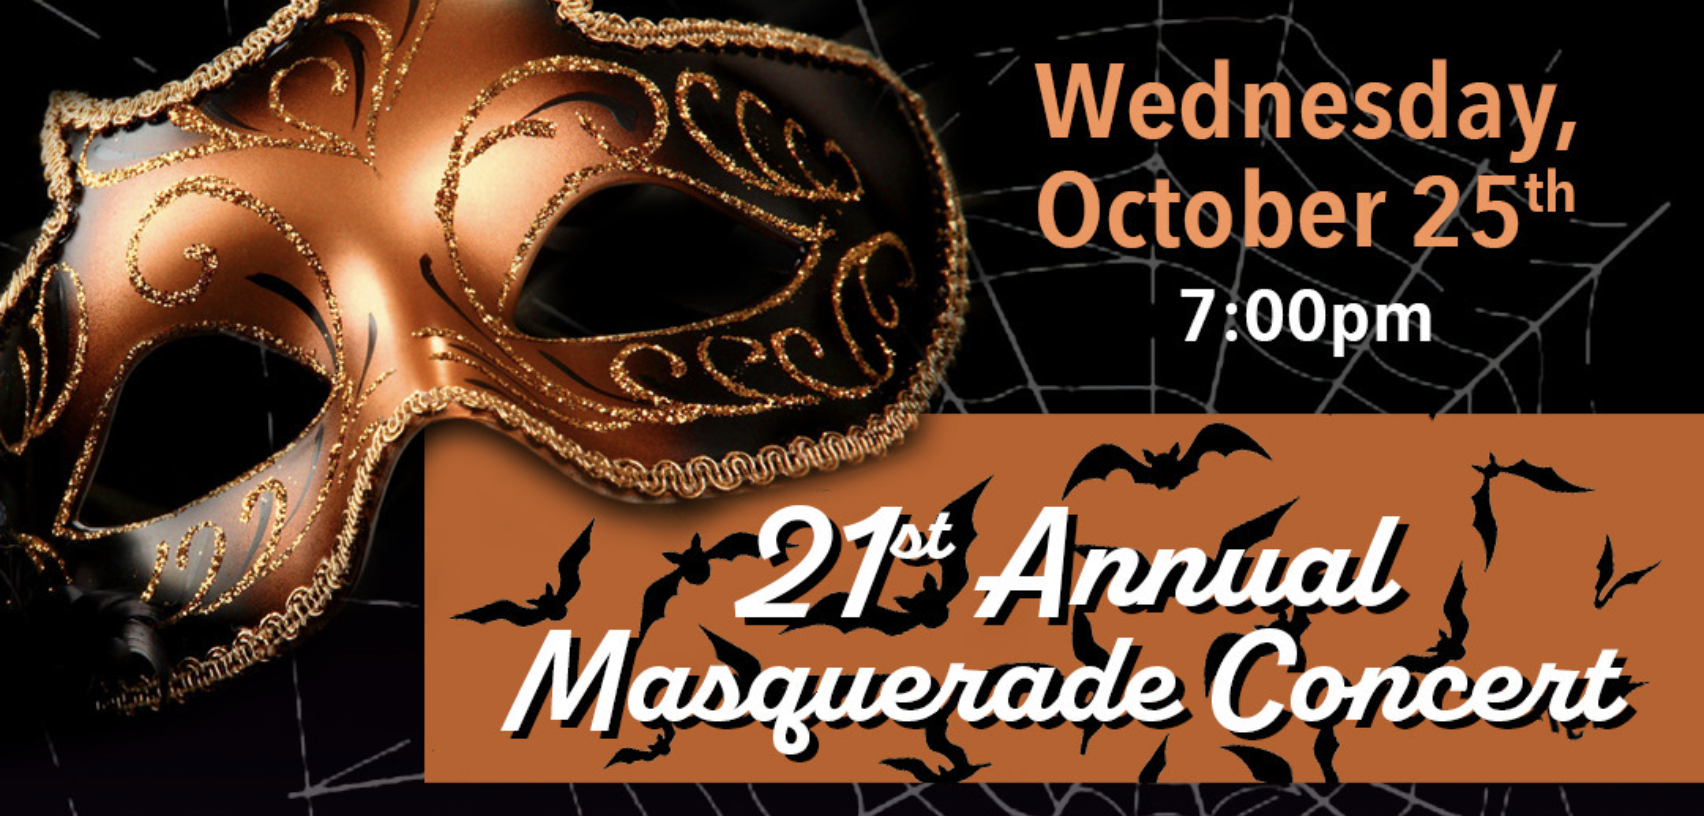 Masquerade Concert – Wednesday October 25th